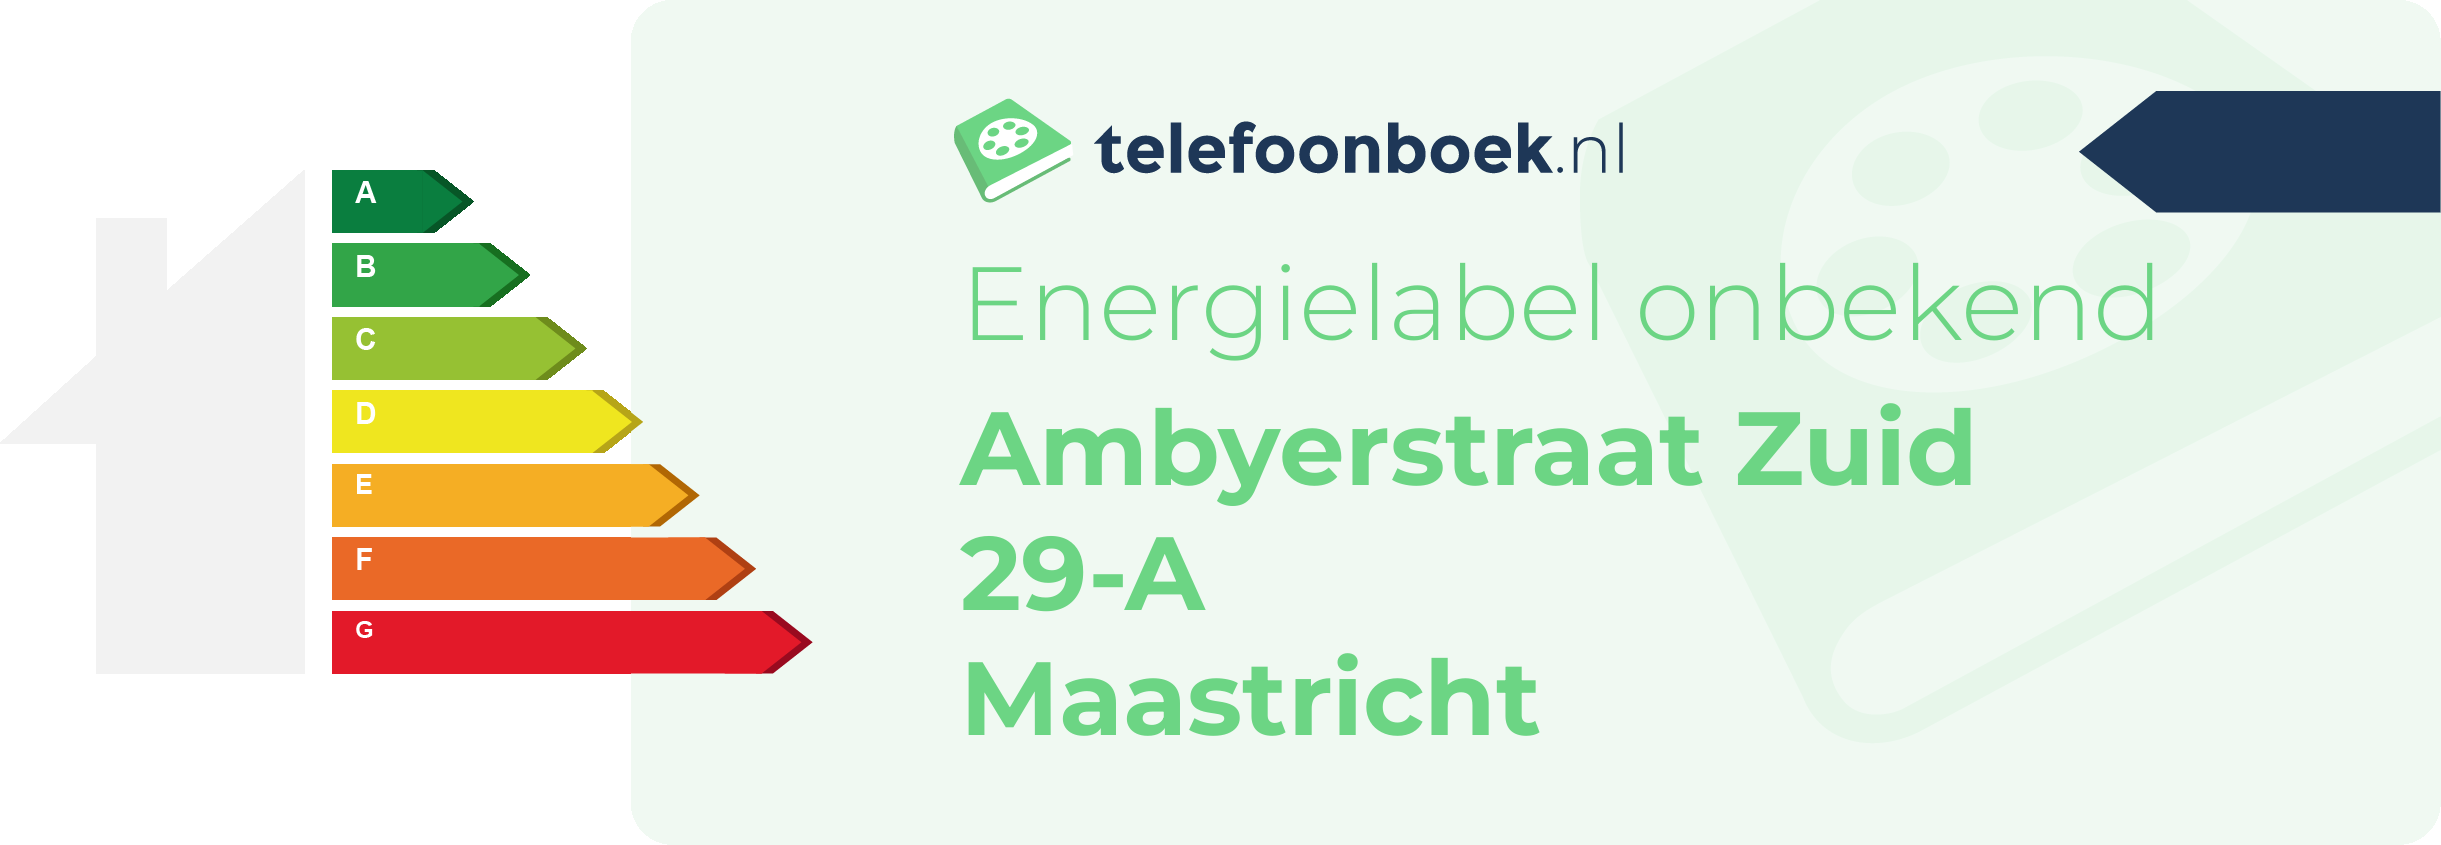 Energielabel Ambyerstraat Zuid 29-A Maastricht